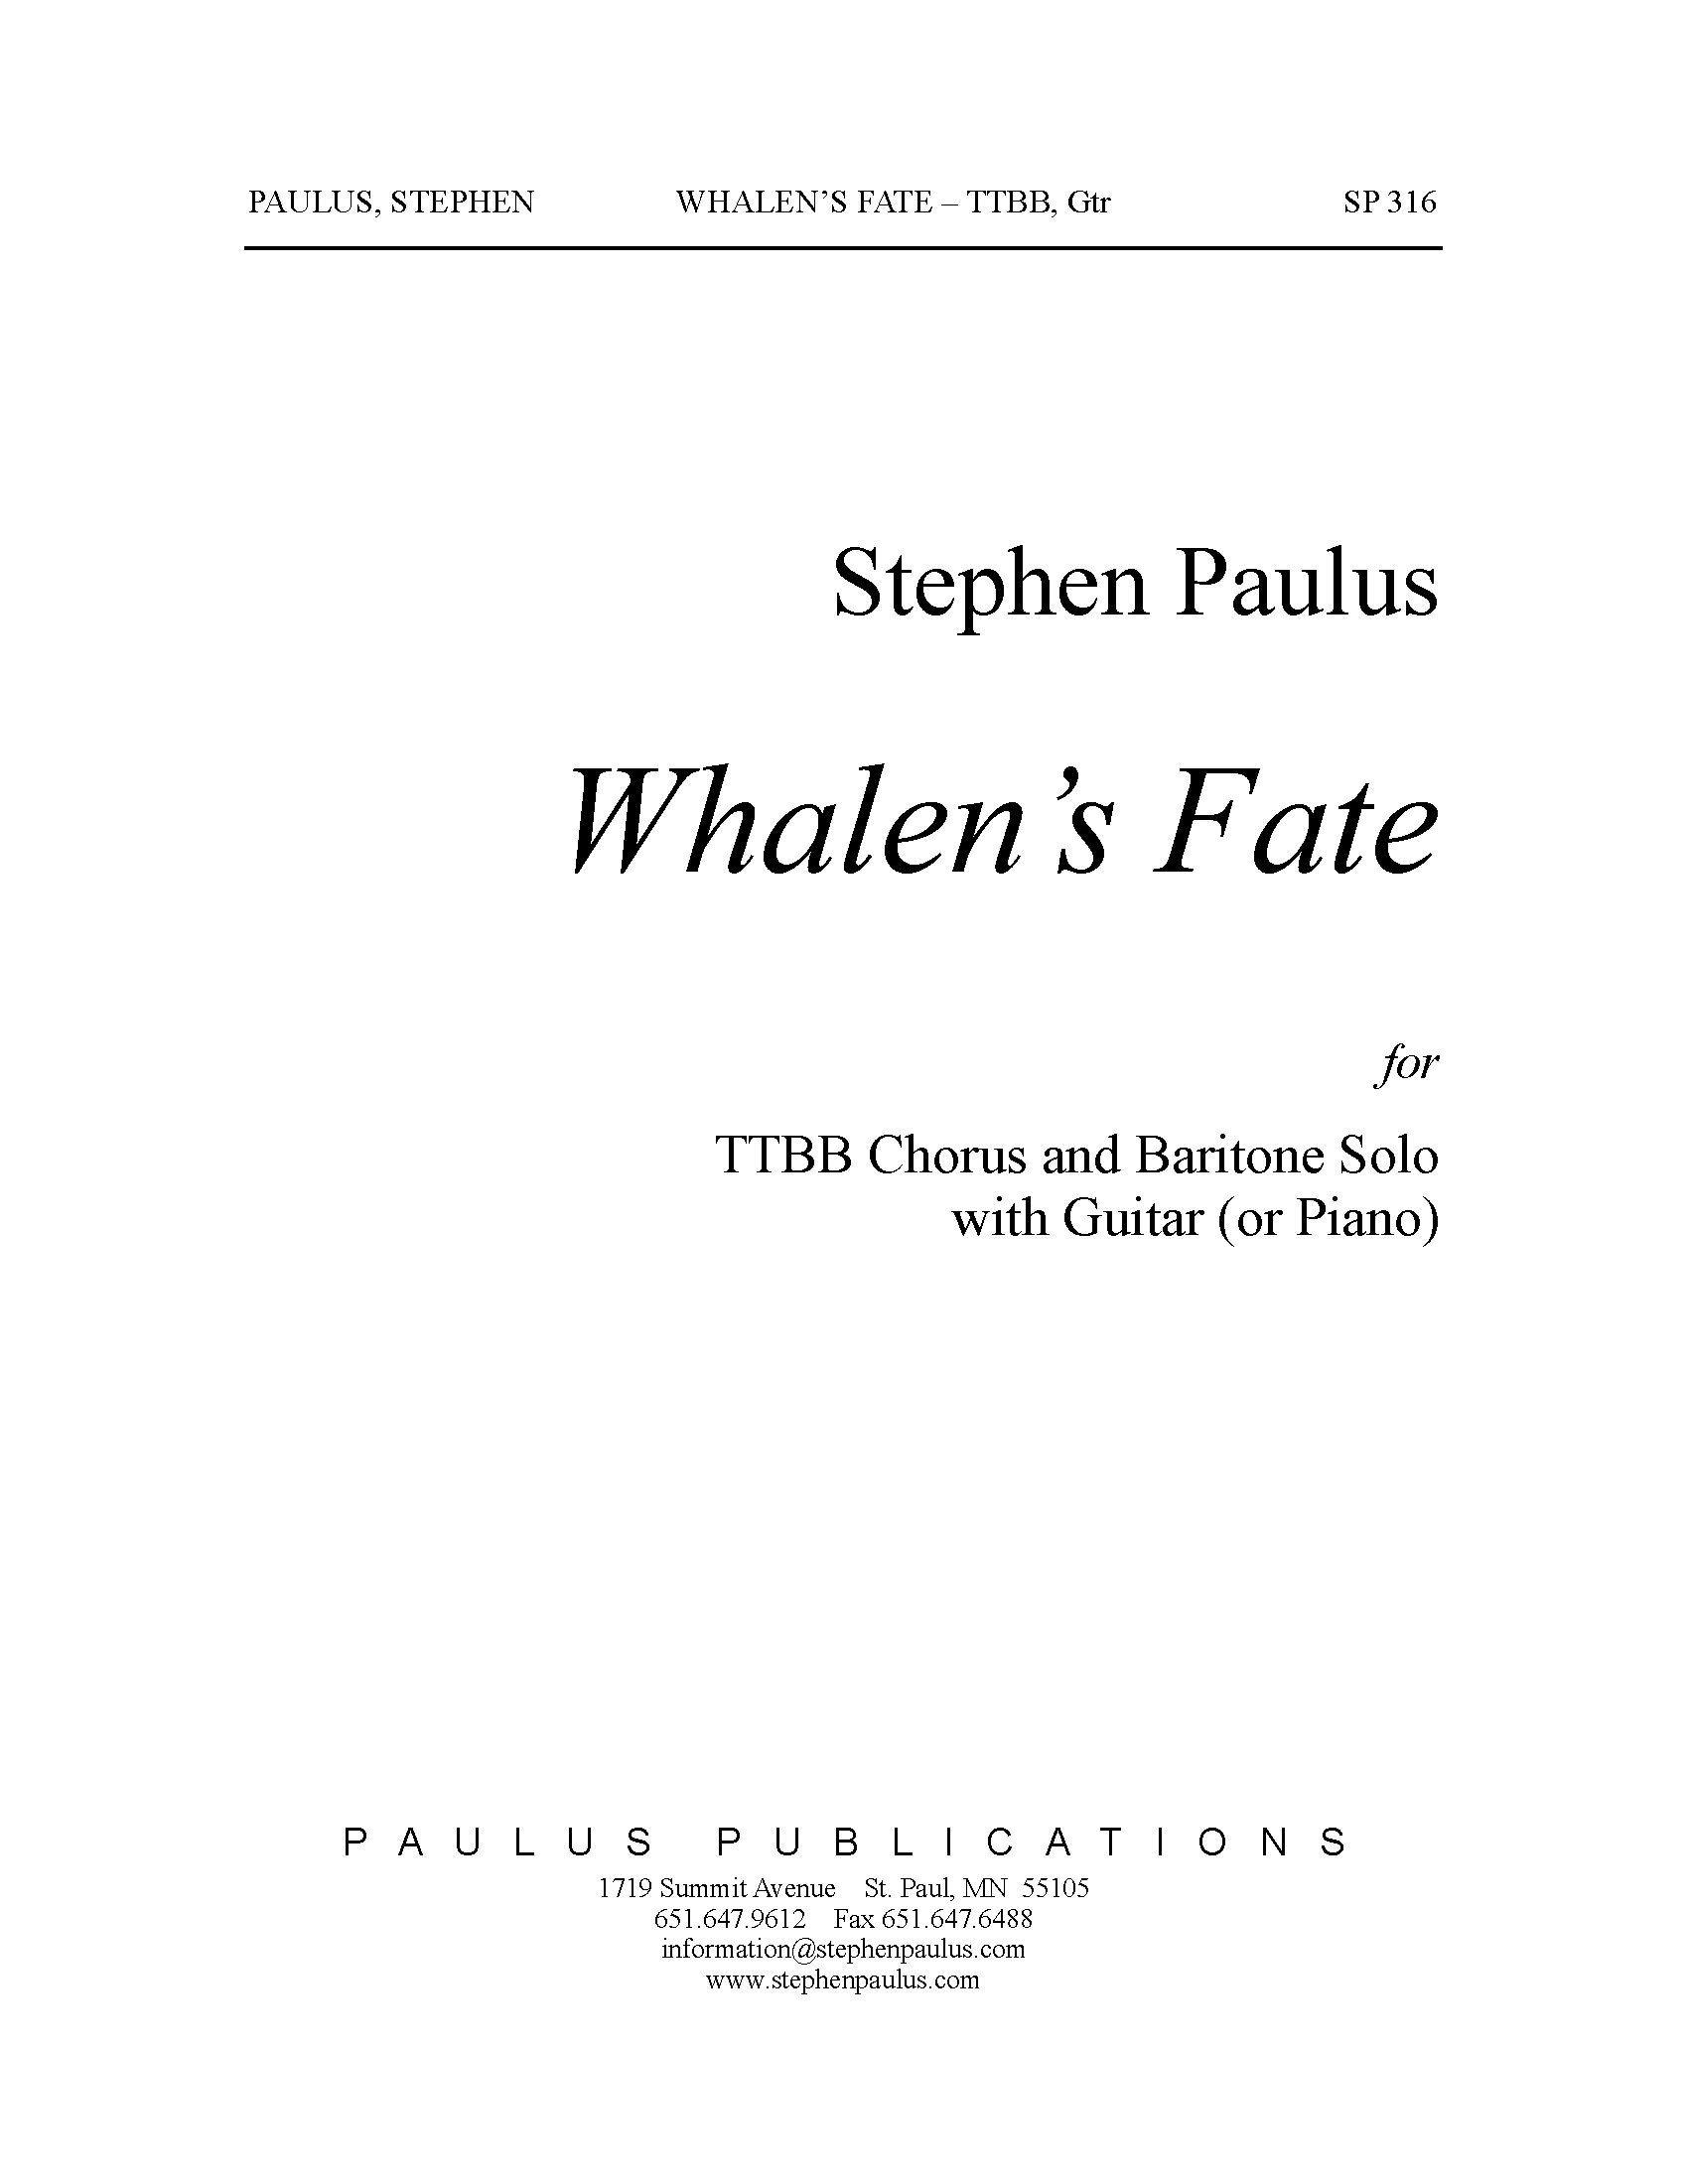 Whalen's Fate for Bar. solo, TTBB Chorus & Guitar (or Piano) - Click Image to Close